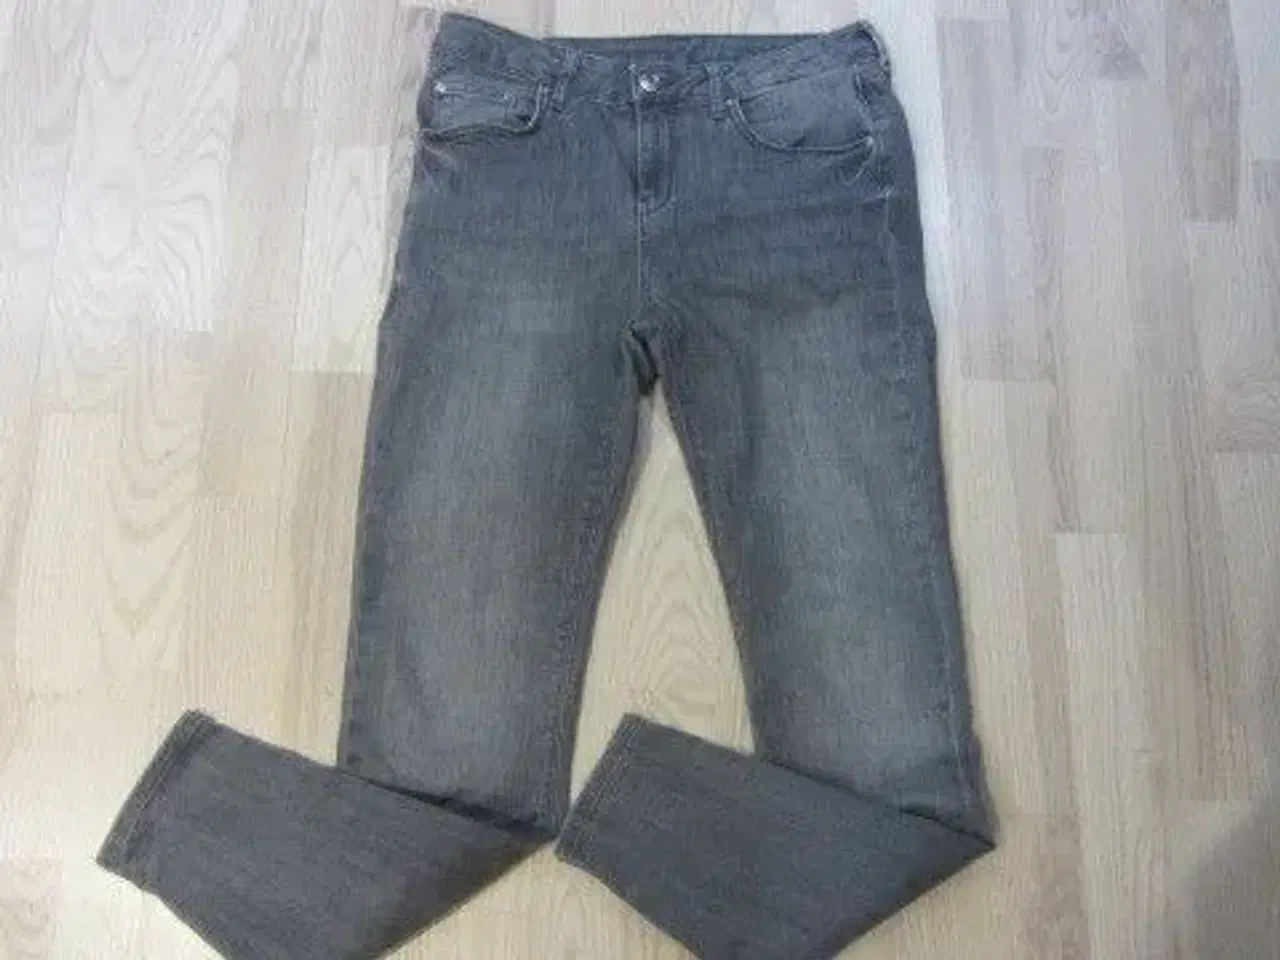 Billede 1 - Str. 30/29, grå elastisk jeans